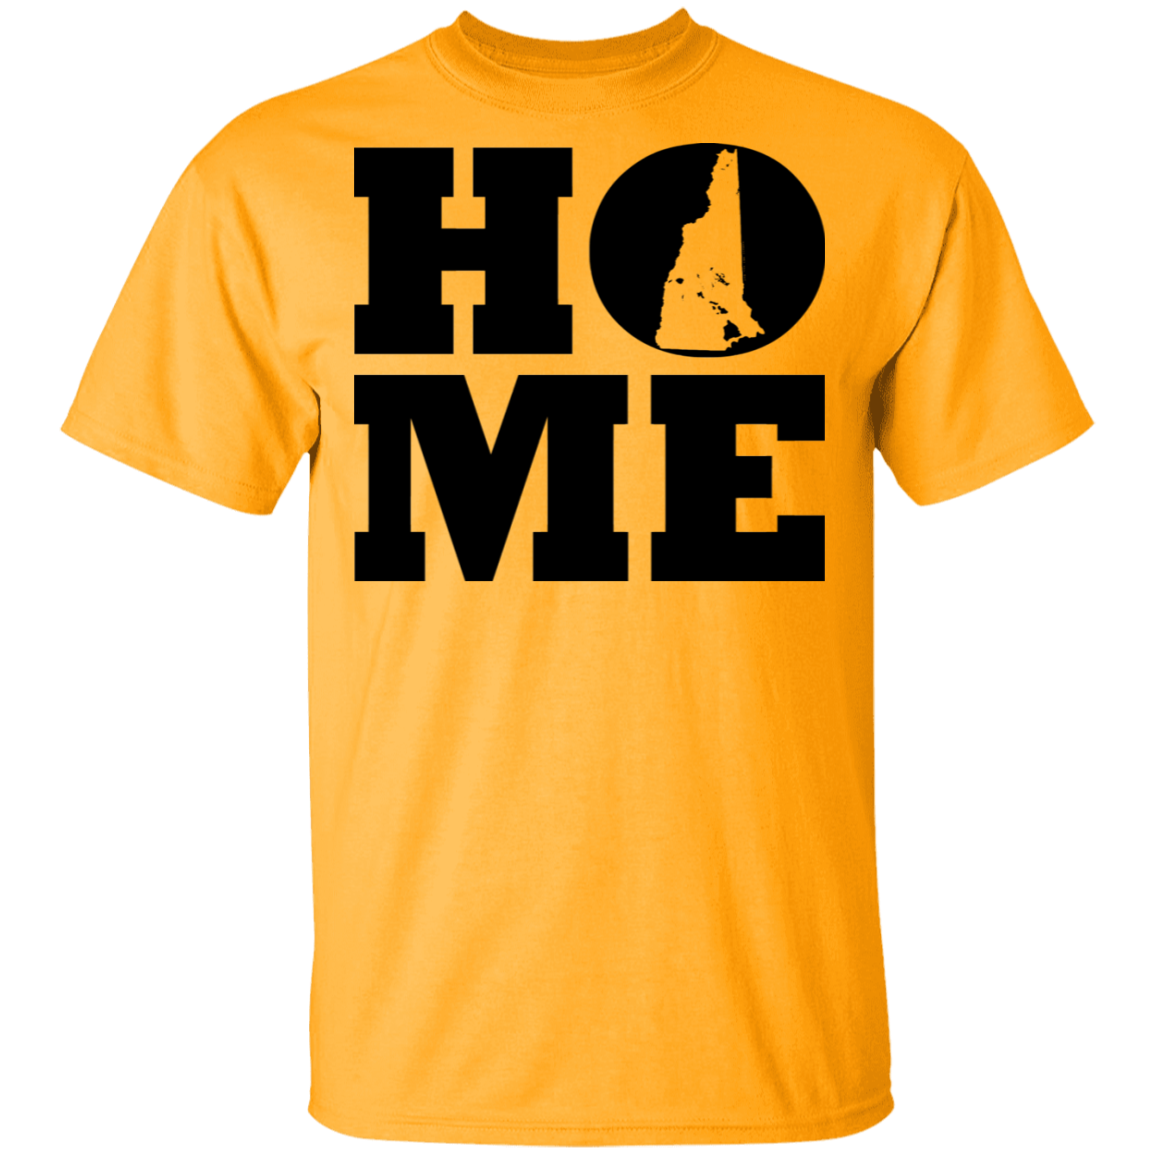 Home Roots Hawai'i and New Hampshire  T-Shirt